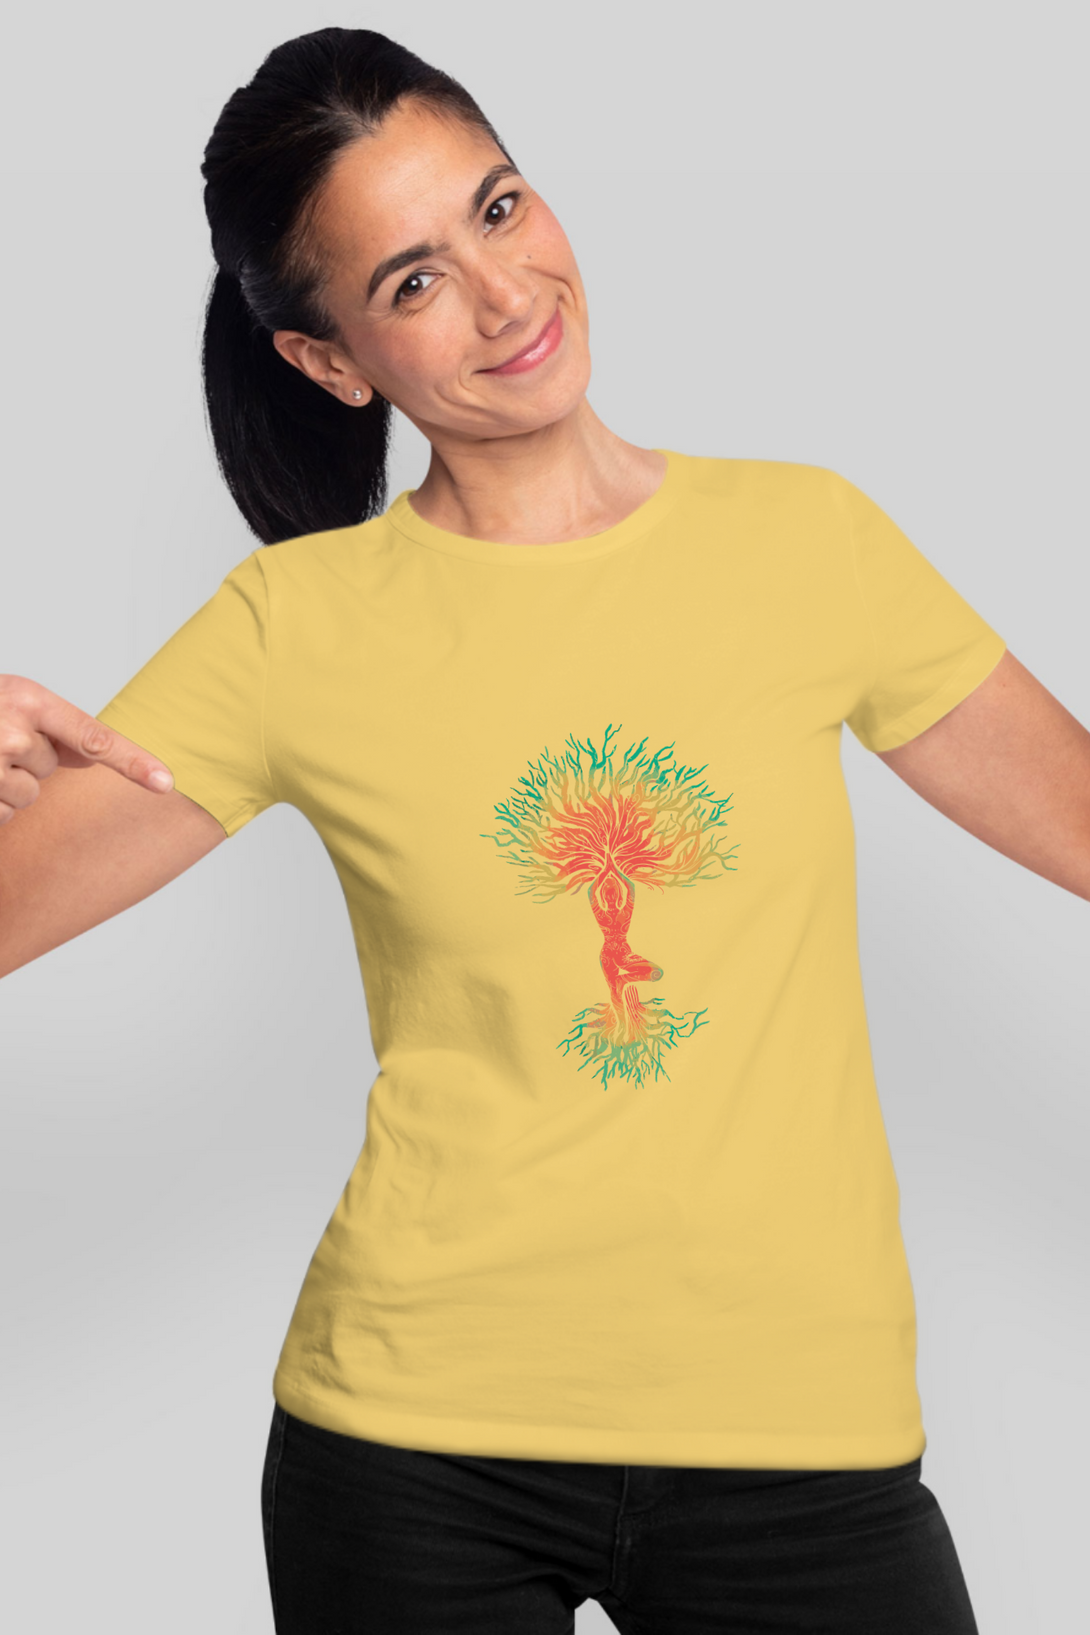 Yoga Tree Printed T-Shirt For Women - WowWaves - 8